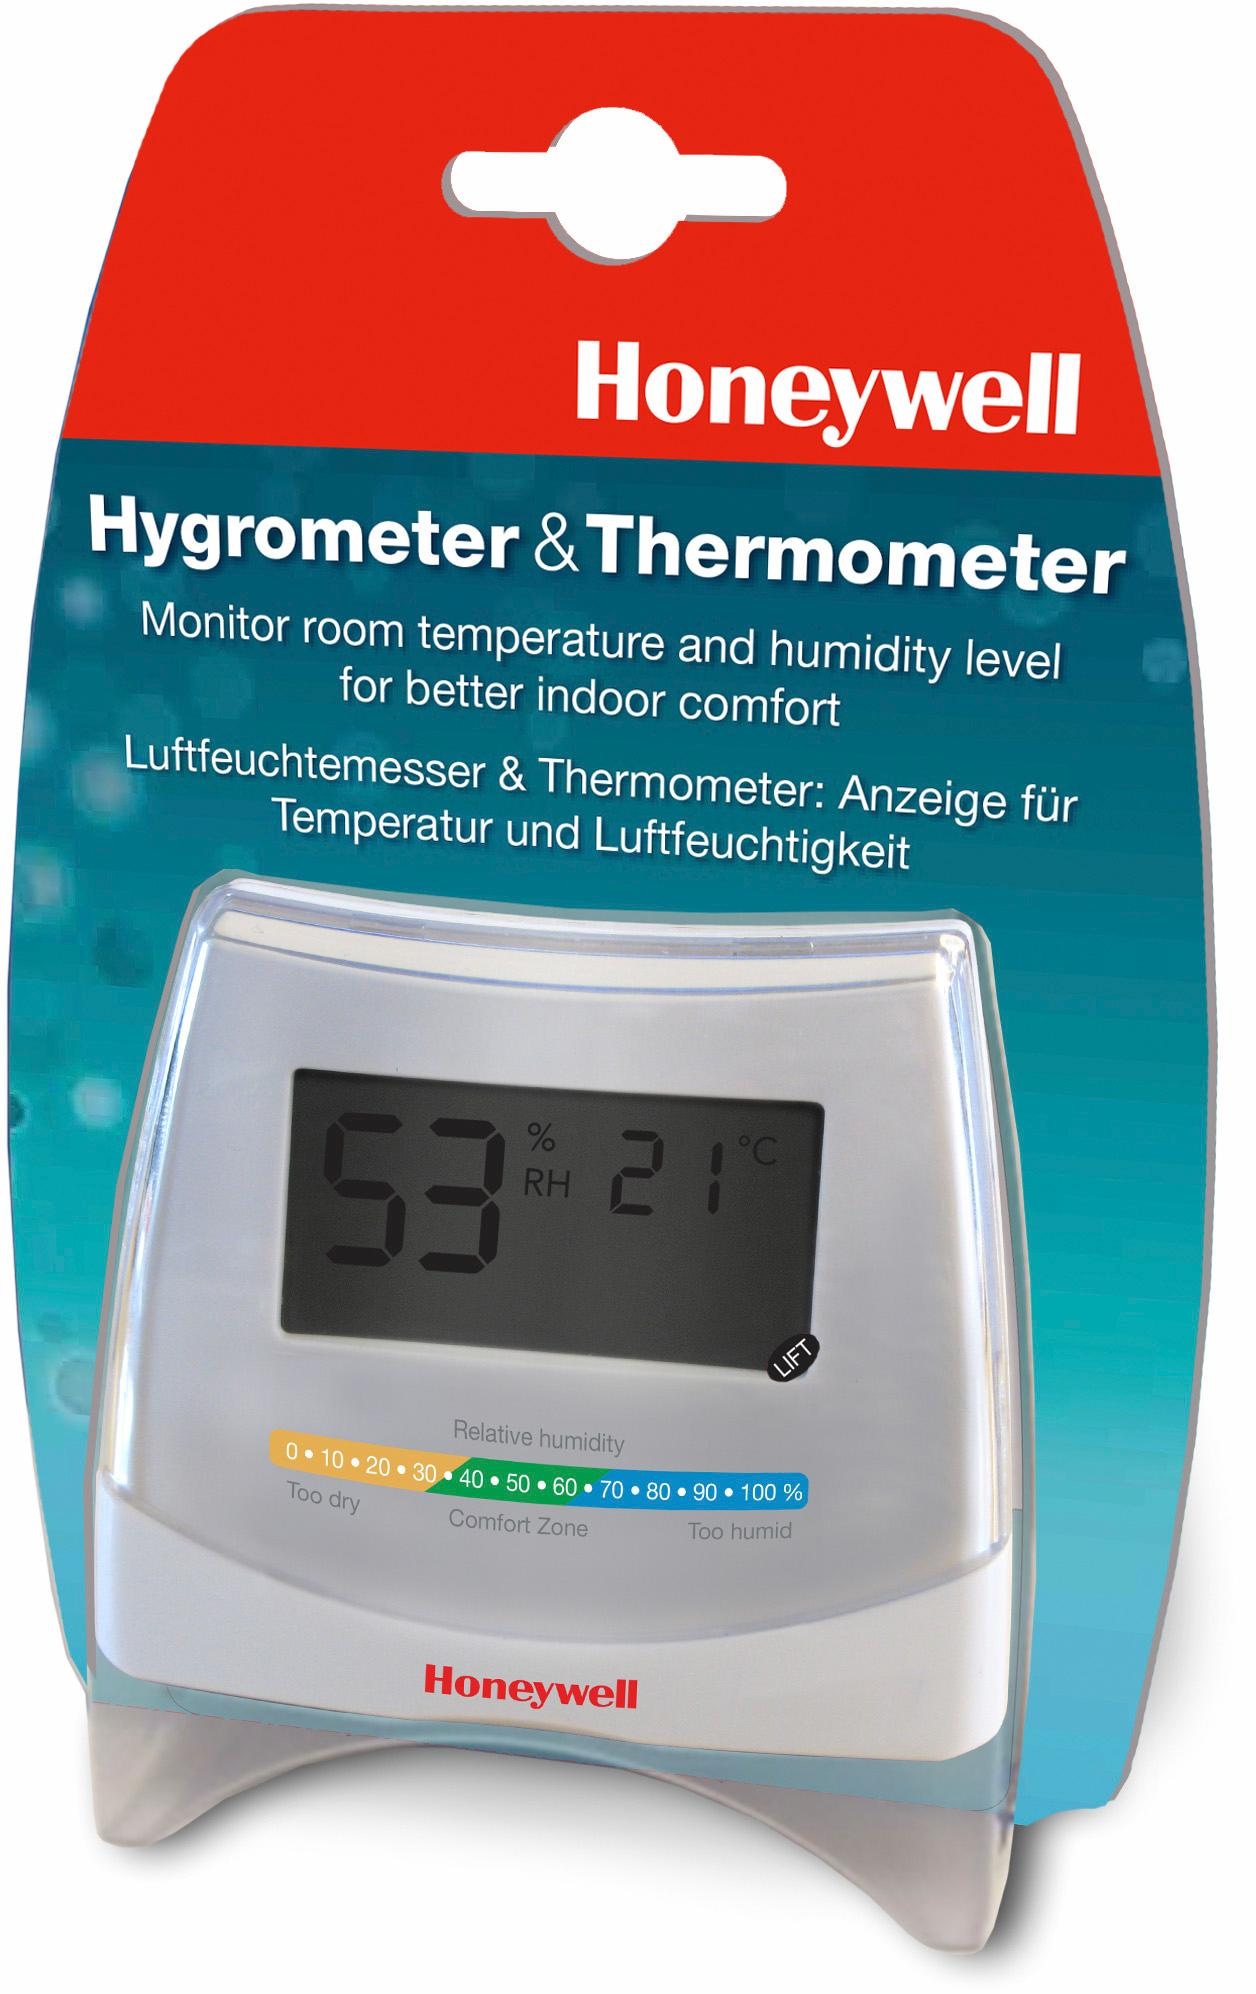 Honeywell Innenwetterstation Thermometer Hygrometer prix »2-in-1 und à HHY70E« bas